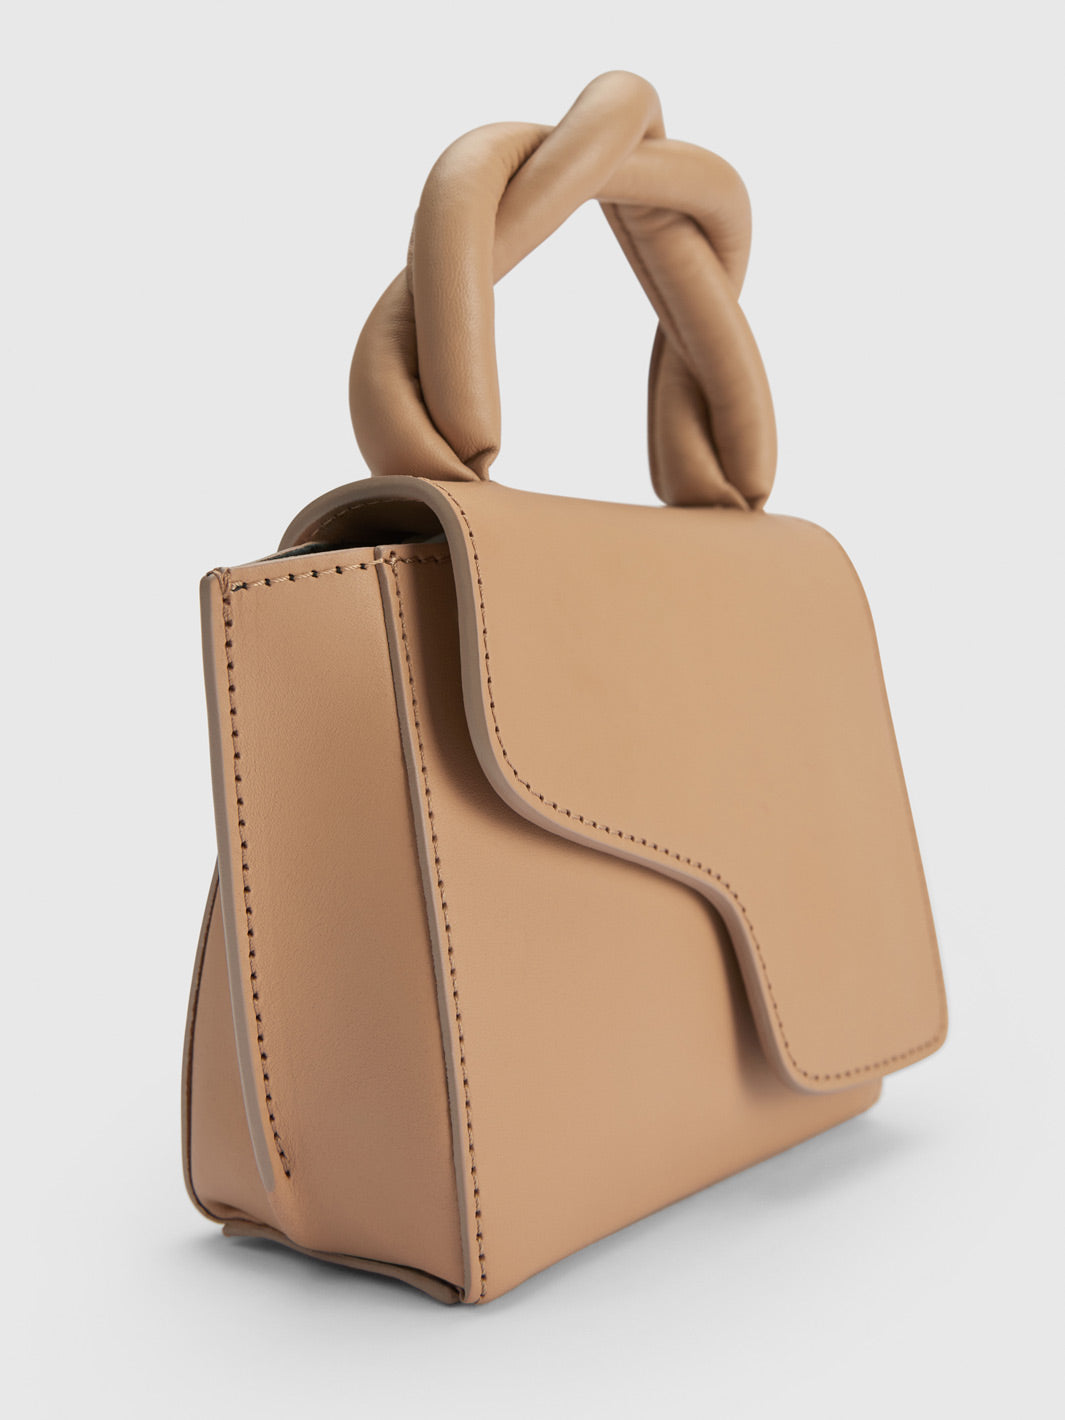 Montalbano Nocciola Leather/Nappa Mini handbag